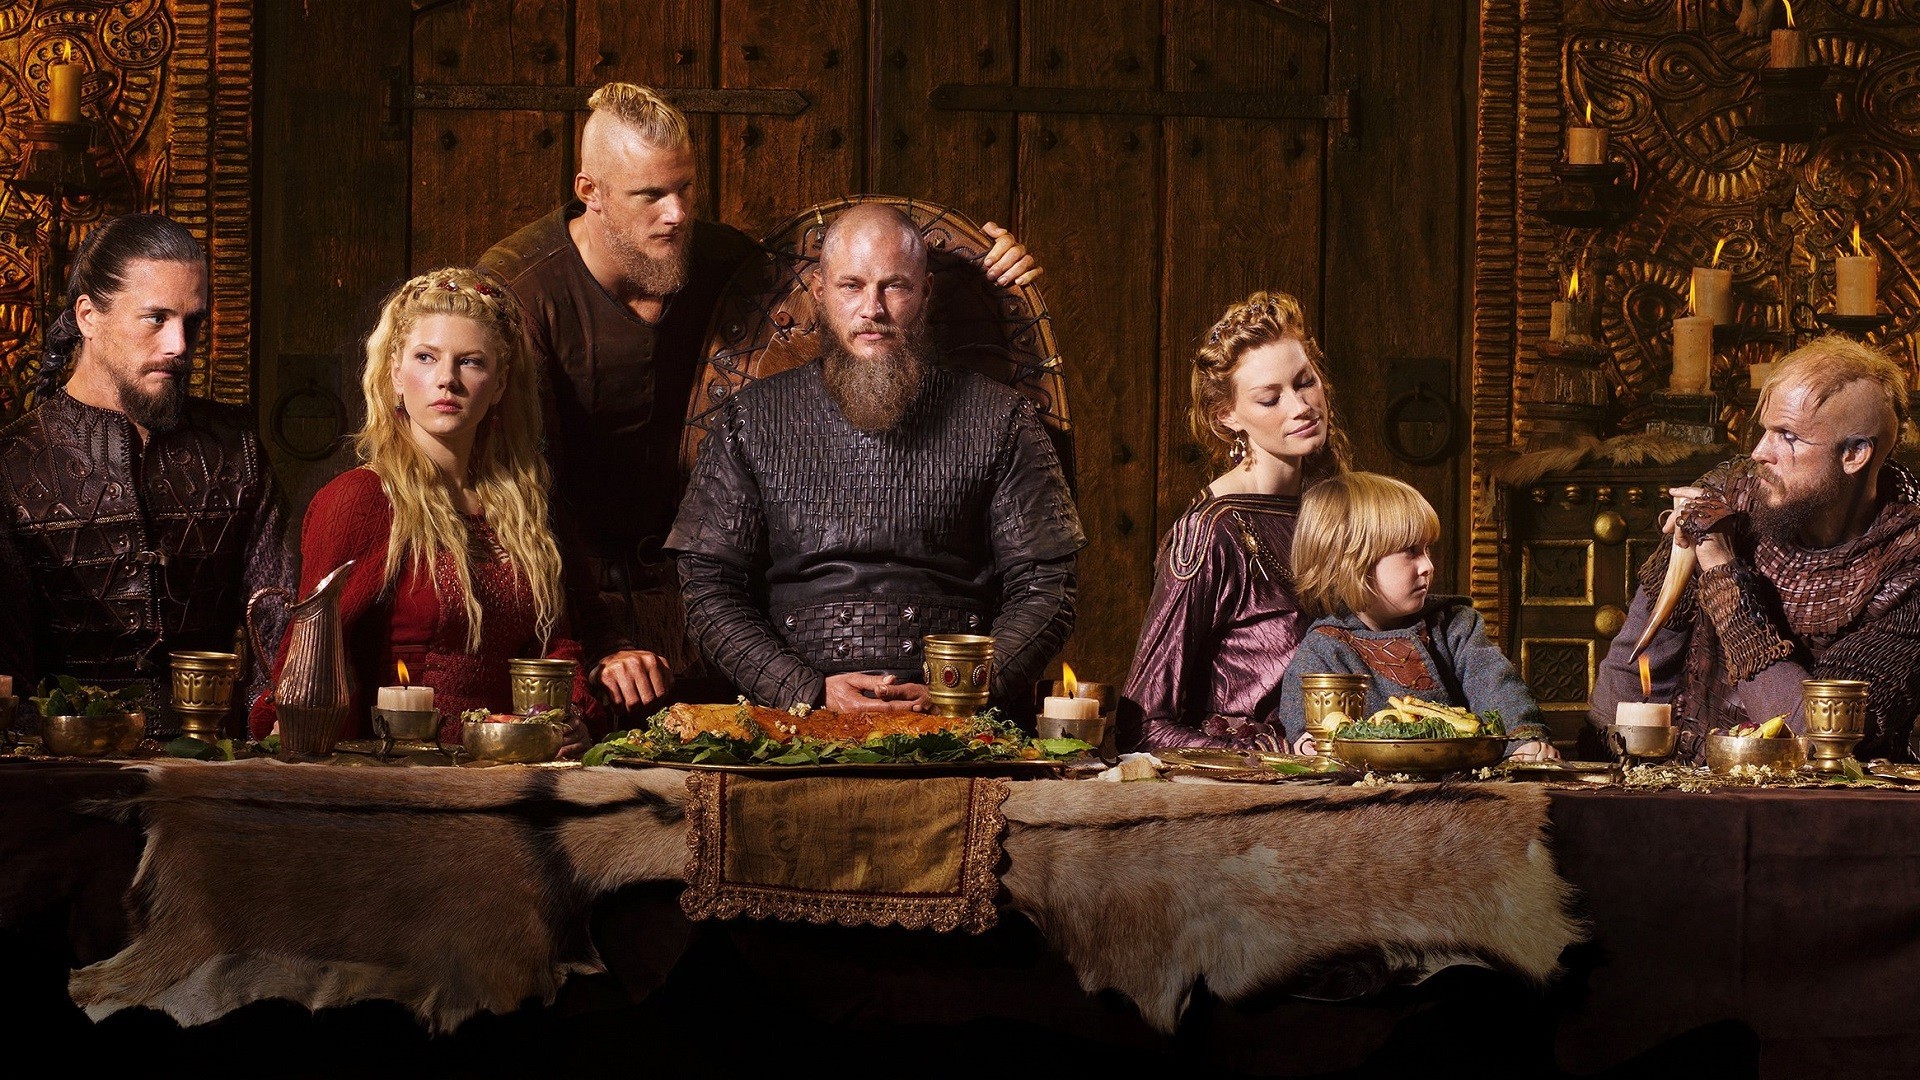 Download Ragnar, Bjorn, And Lagertha In Vikings Wallpaper